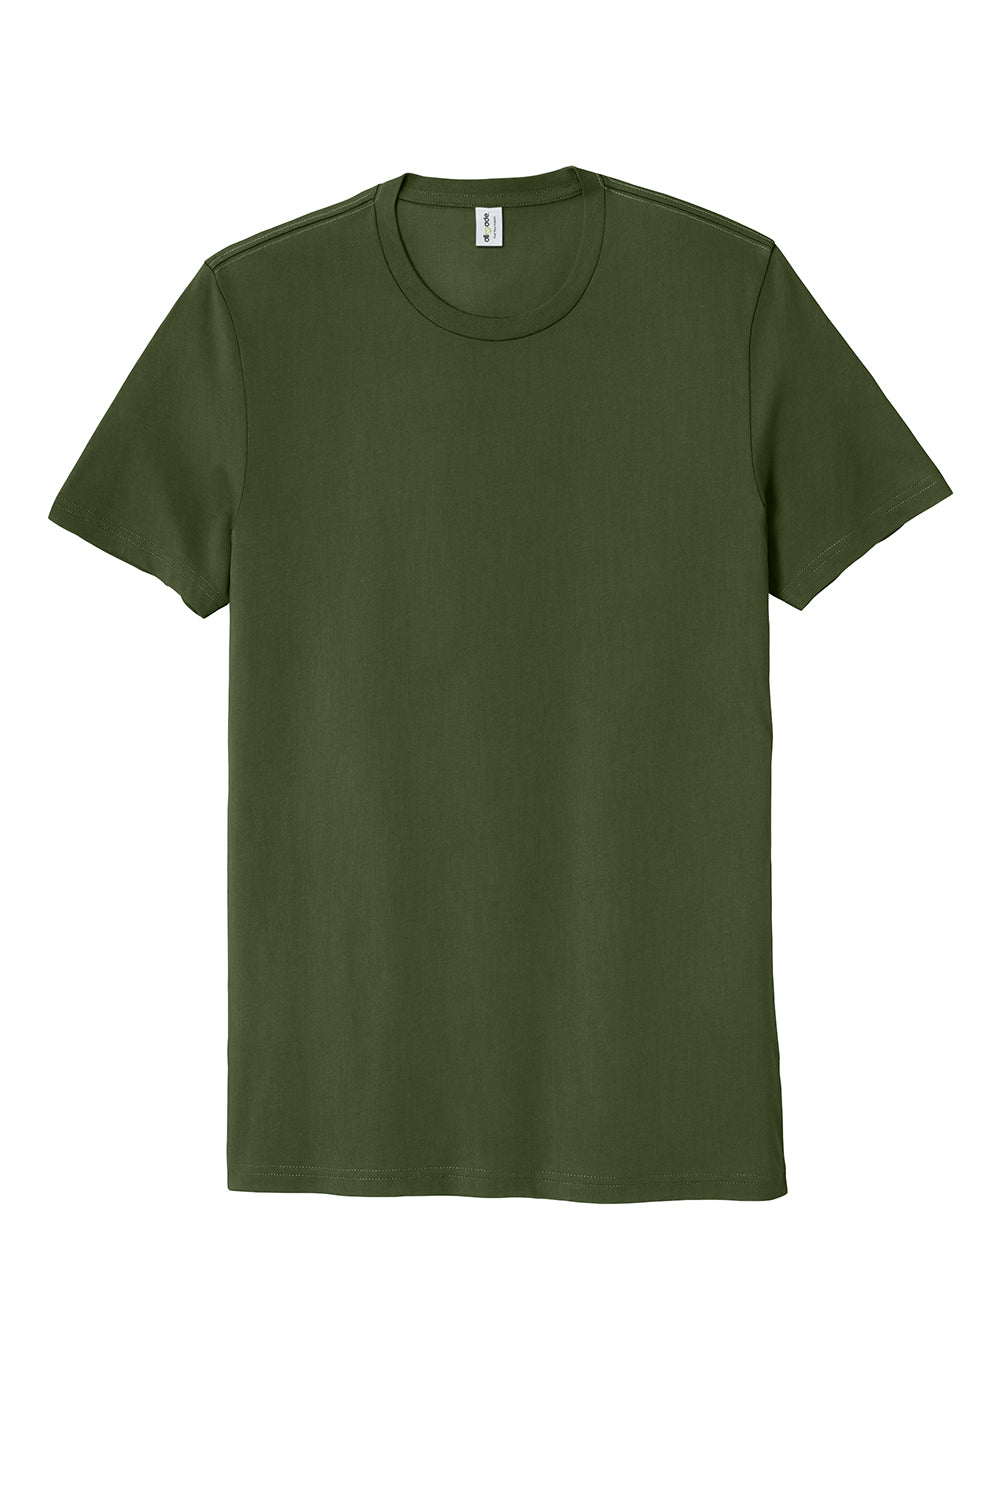 Allmade AL2100 Mens Organic Short Sleeve Crewneck T-Shirt Herb Green Flat Front